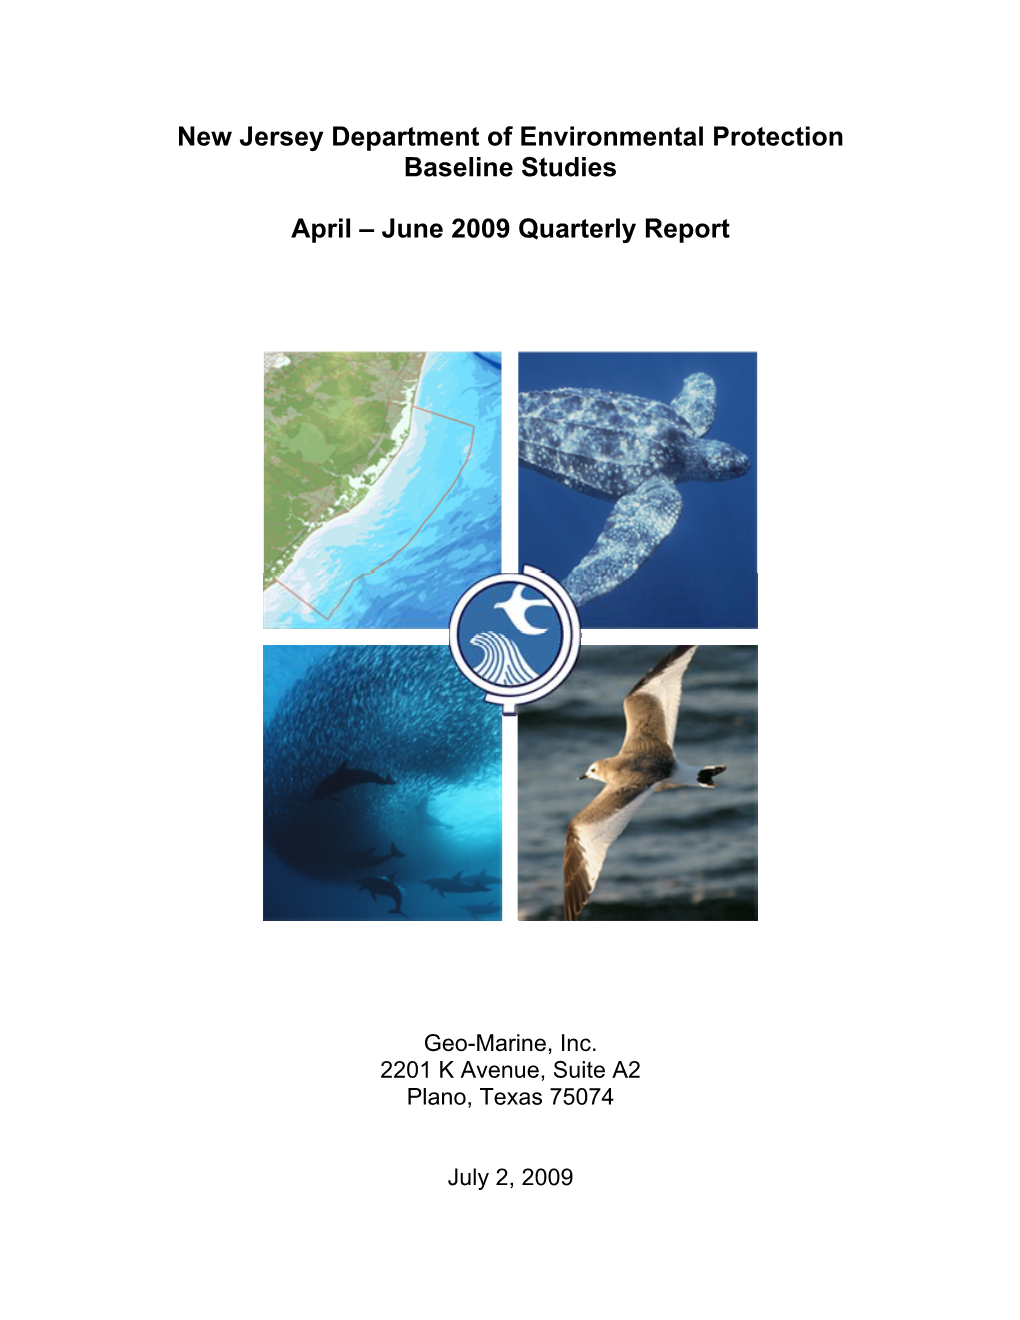 April-June 2009), for Both the Offshore (Ship) and Coastal (Boat) Surveys, for Total Birds